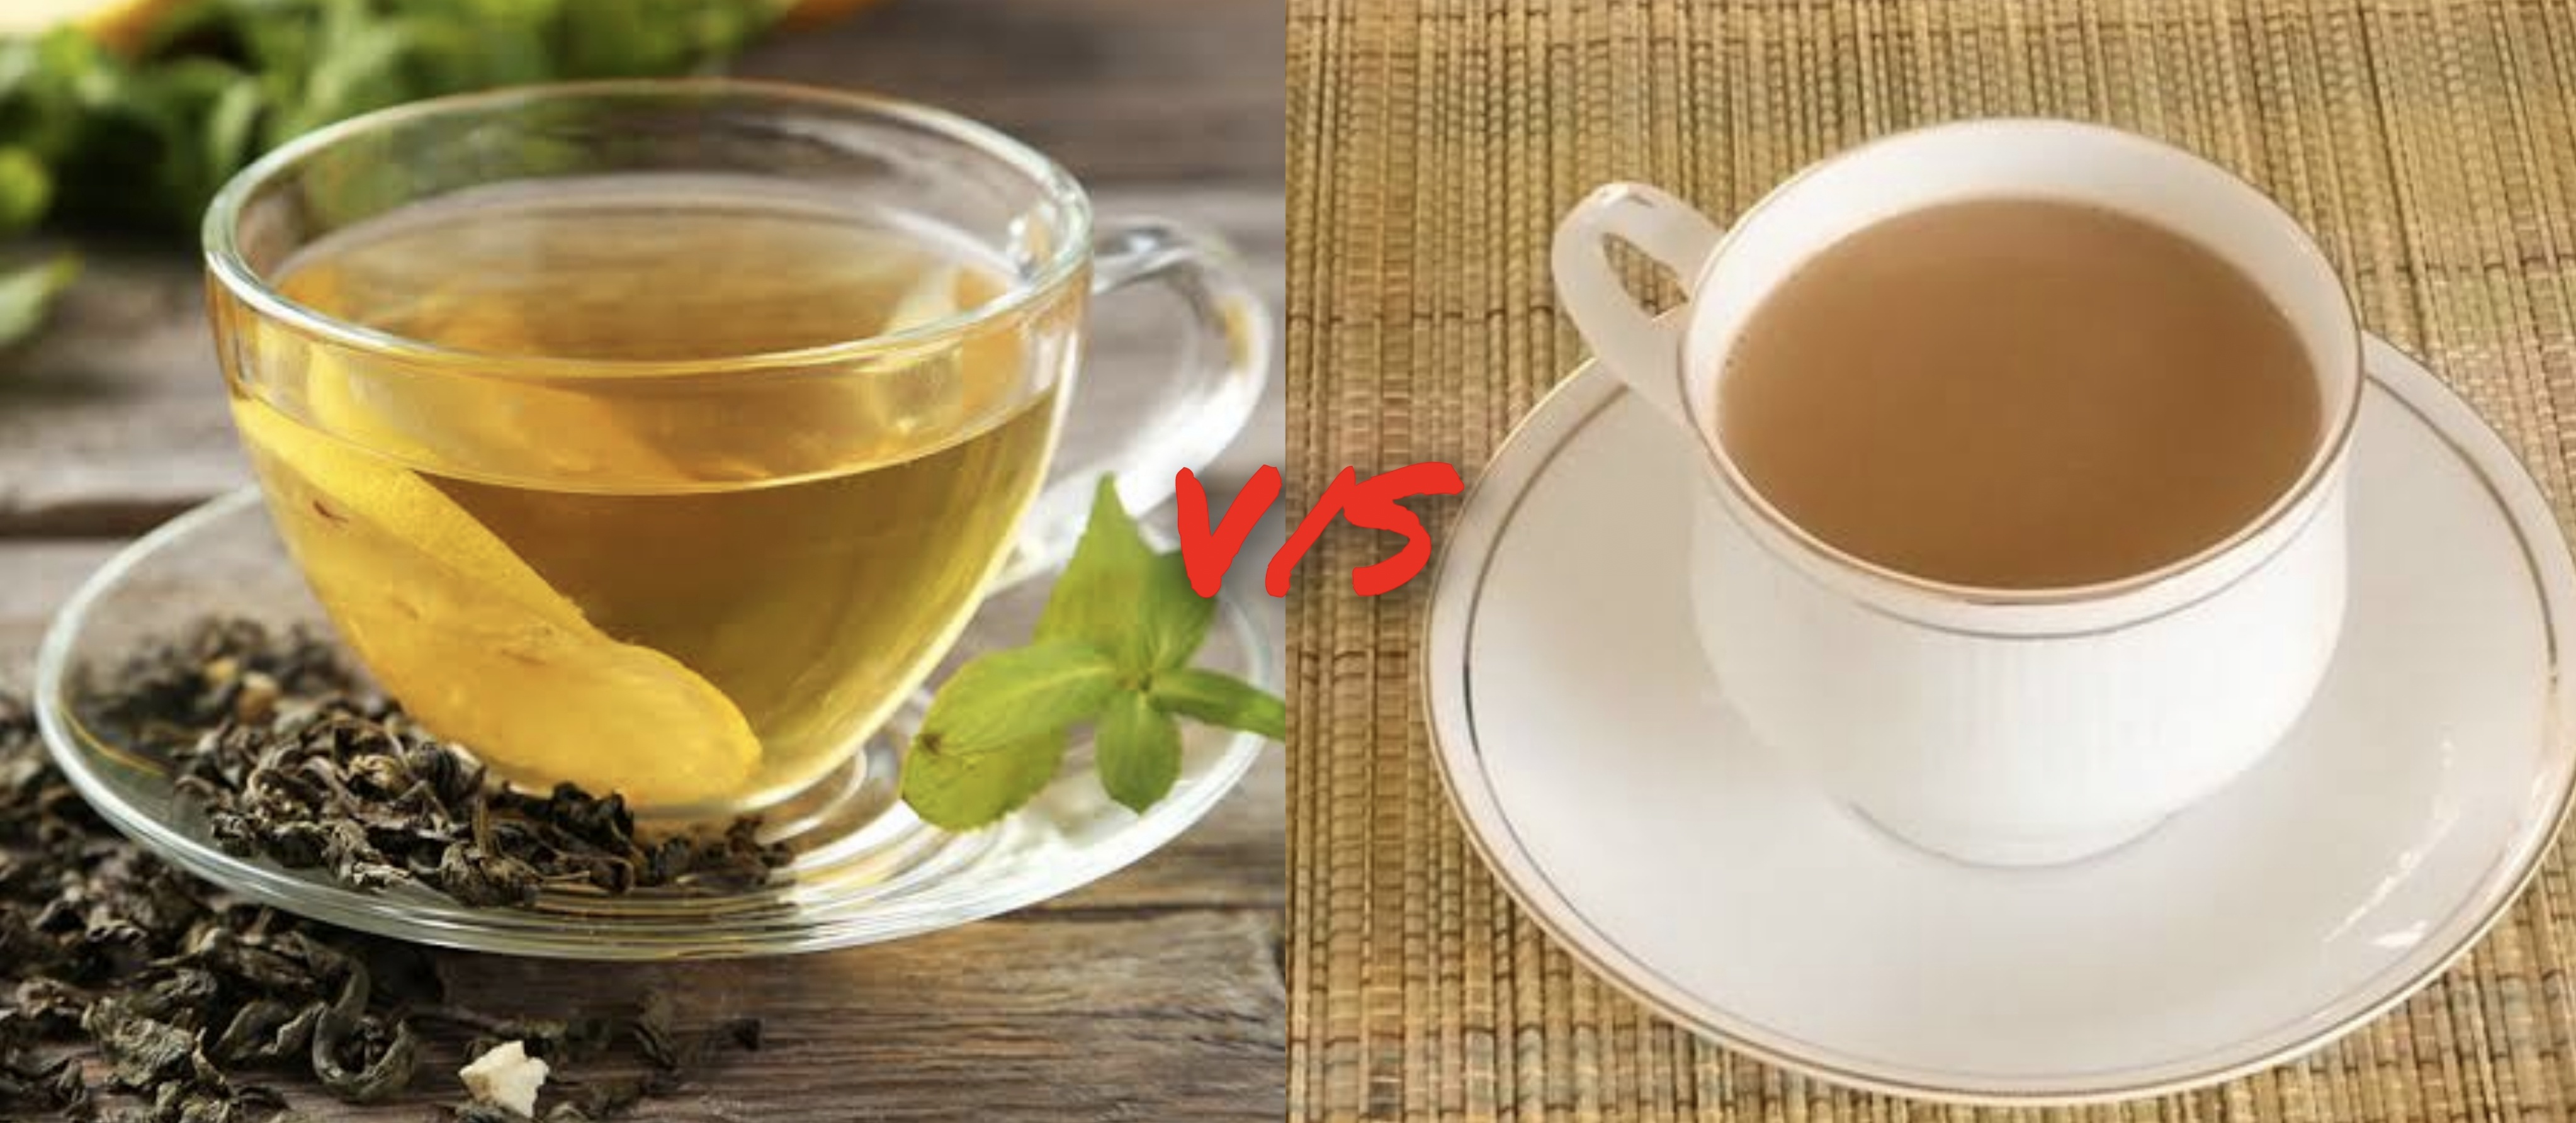 Green Tea vs Milk Tea - Which is good for Health?